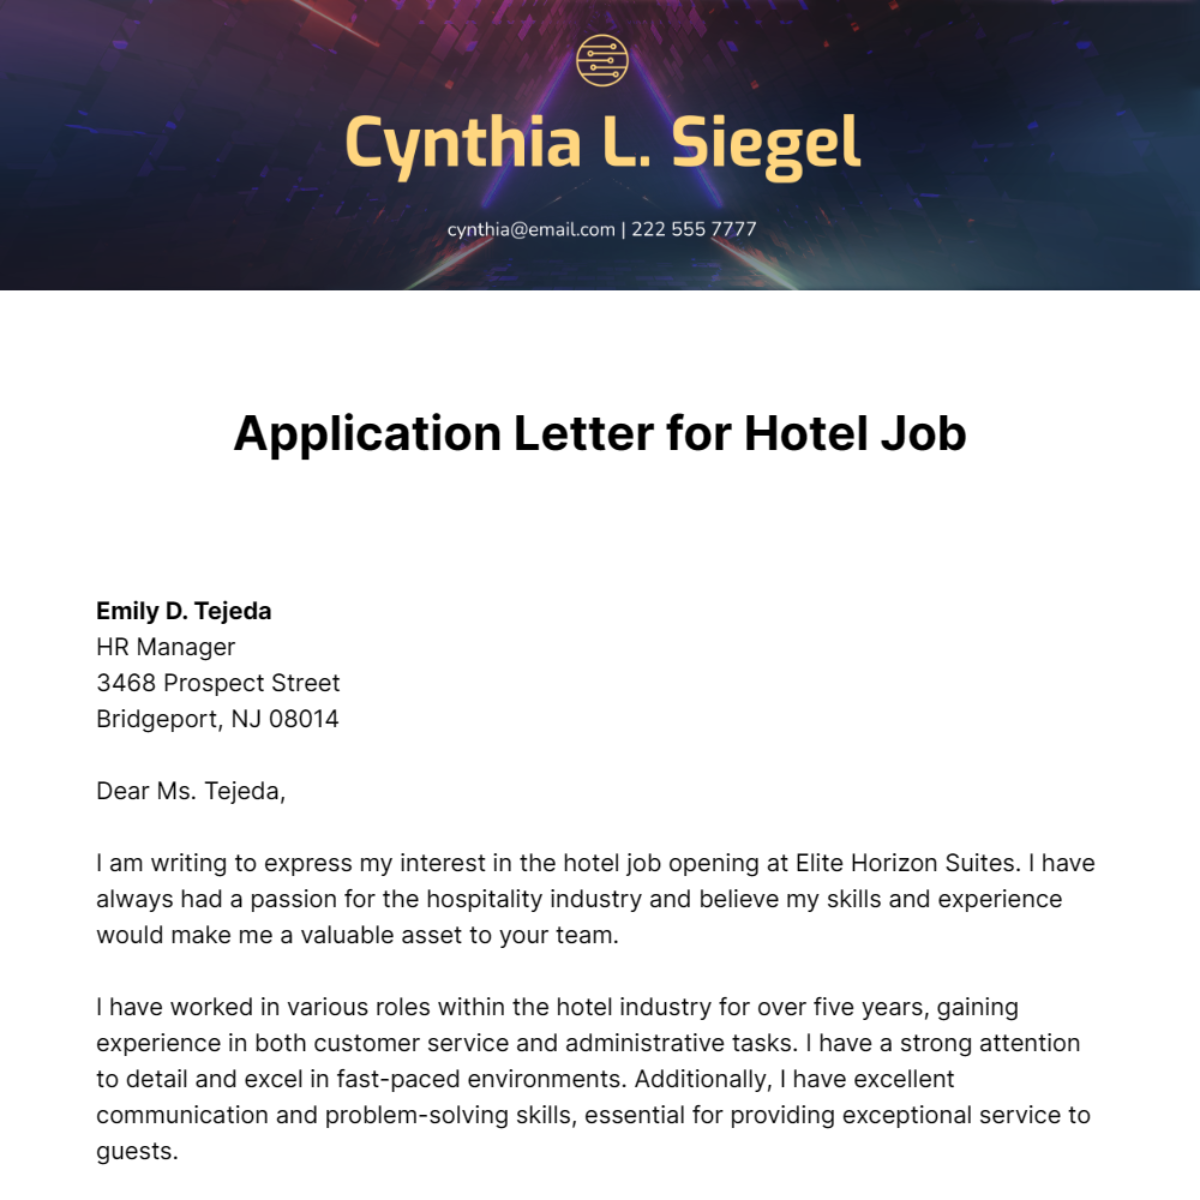 Application Letter for Hotel Job Template